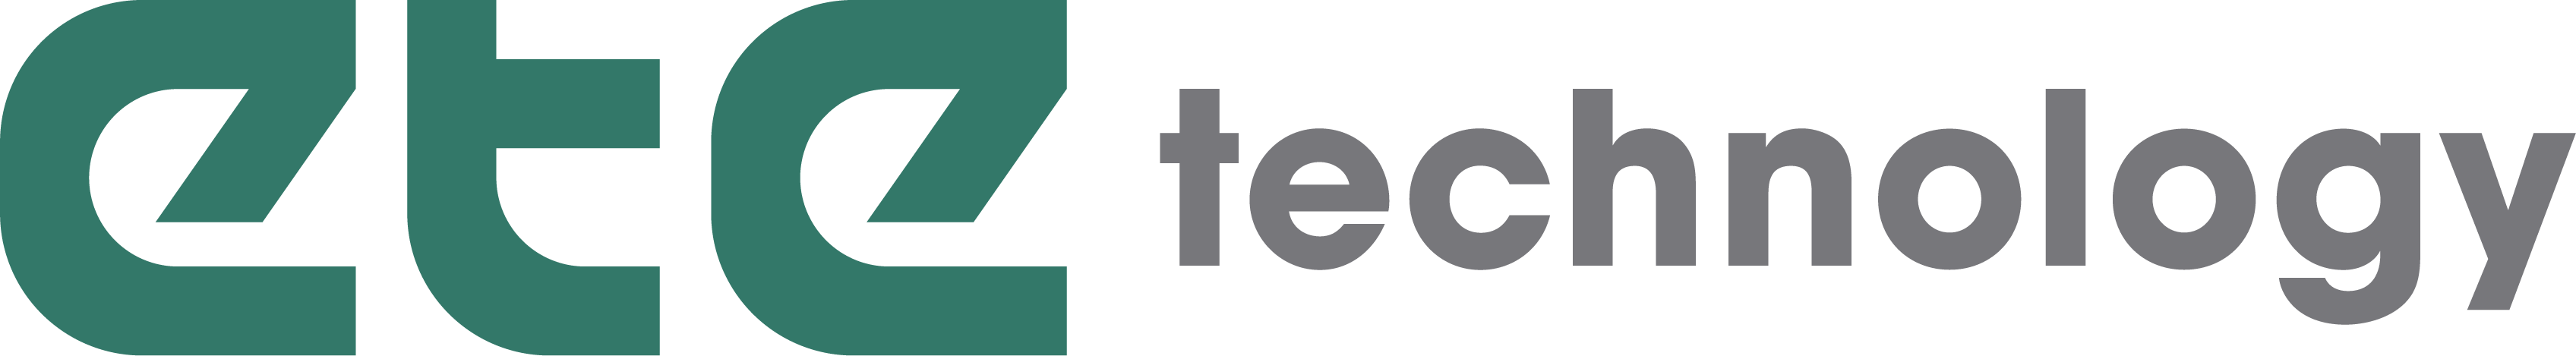 etetechnology logo